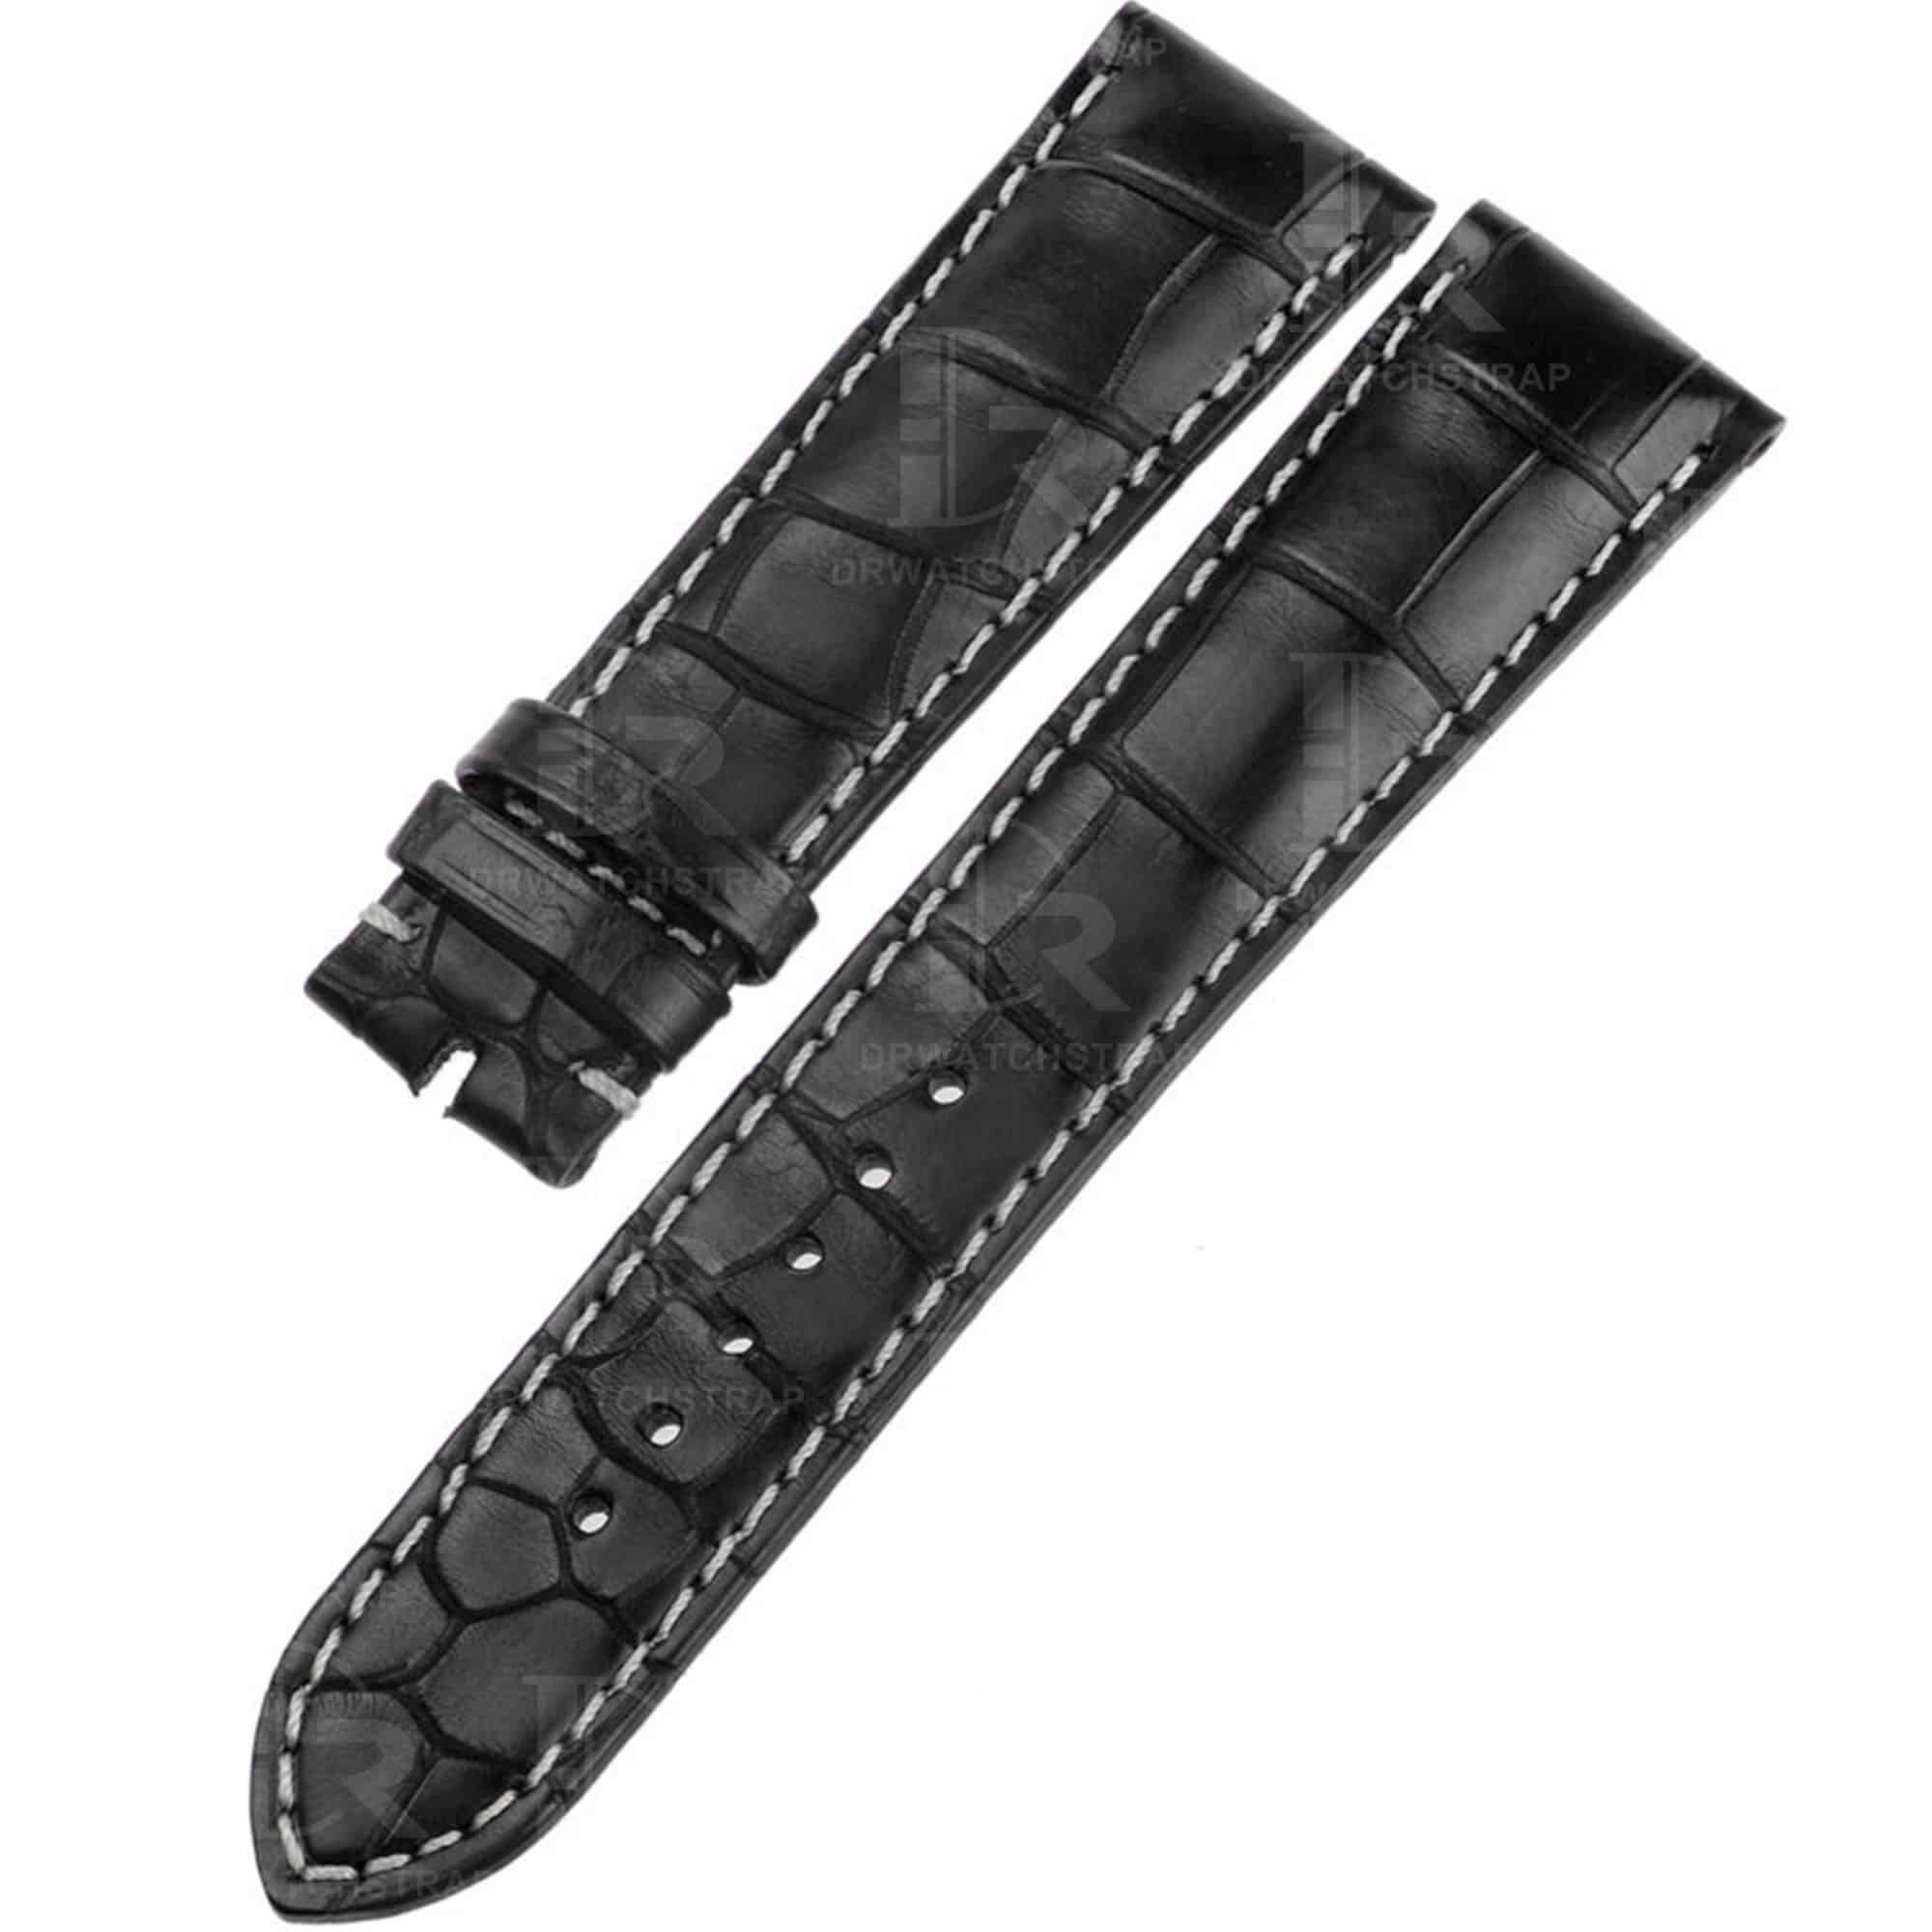 Handmade custom black leather alligator watch band for Corum Admiral's Cup Golden Bridge straps